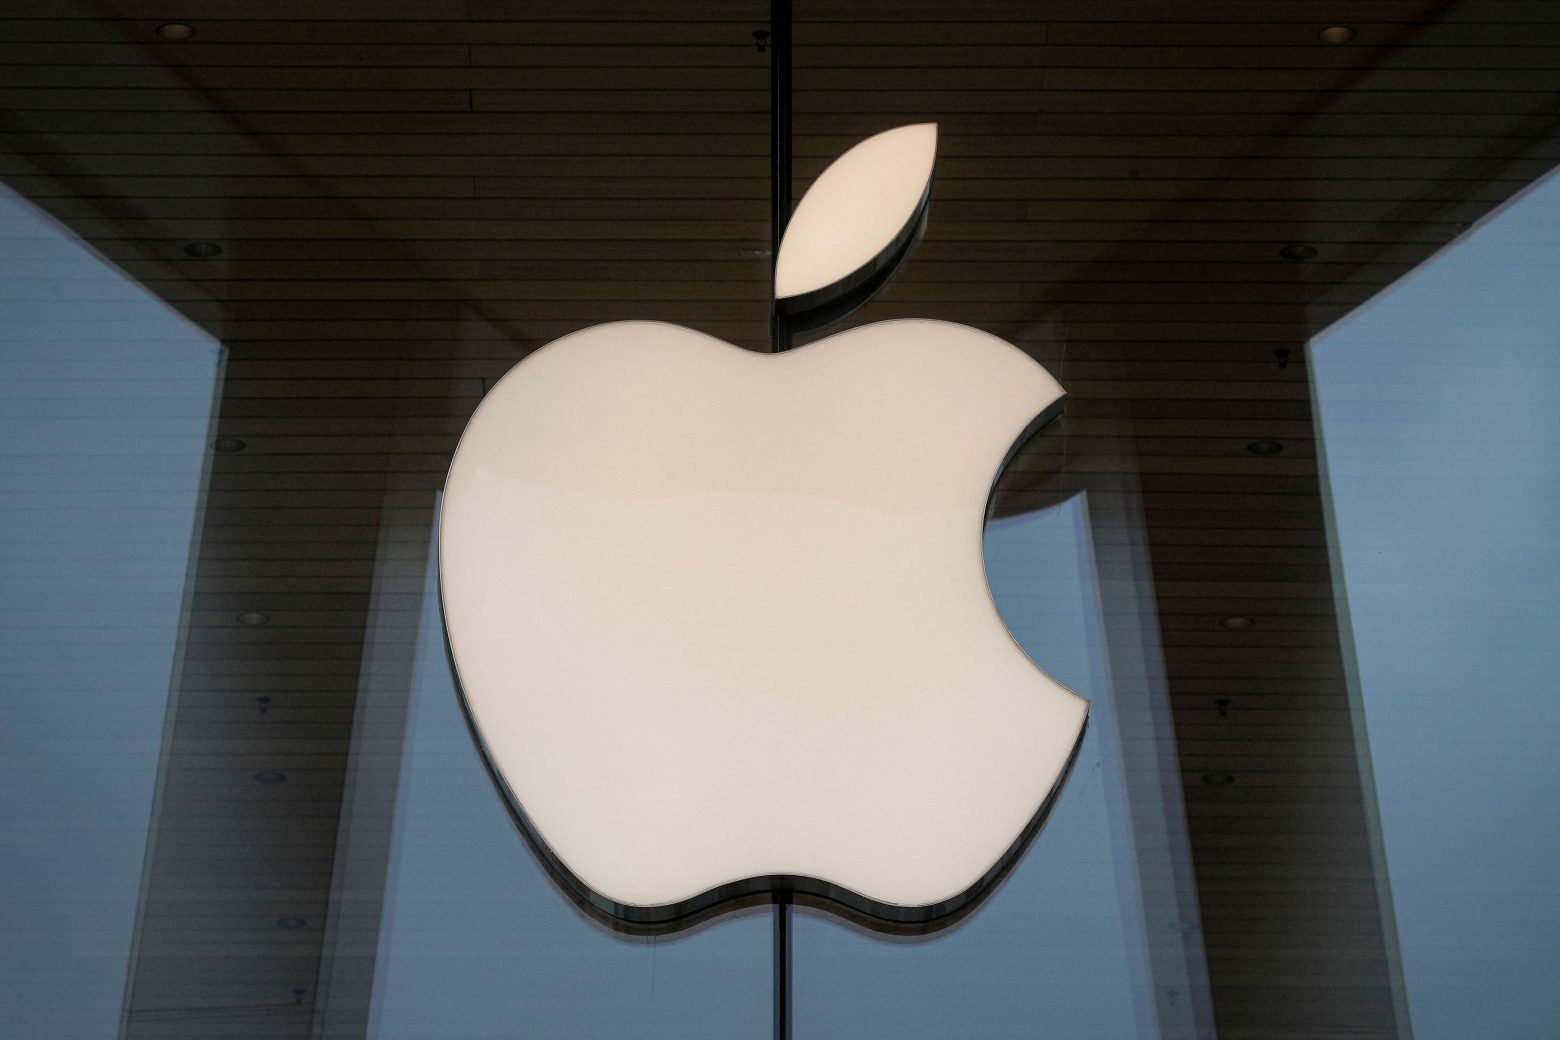 Apple: Λιγότερες προσλήψεις και δαπάνες το 2023 λόγω φόβων για ύφεση